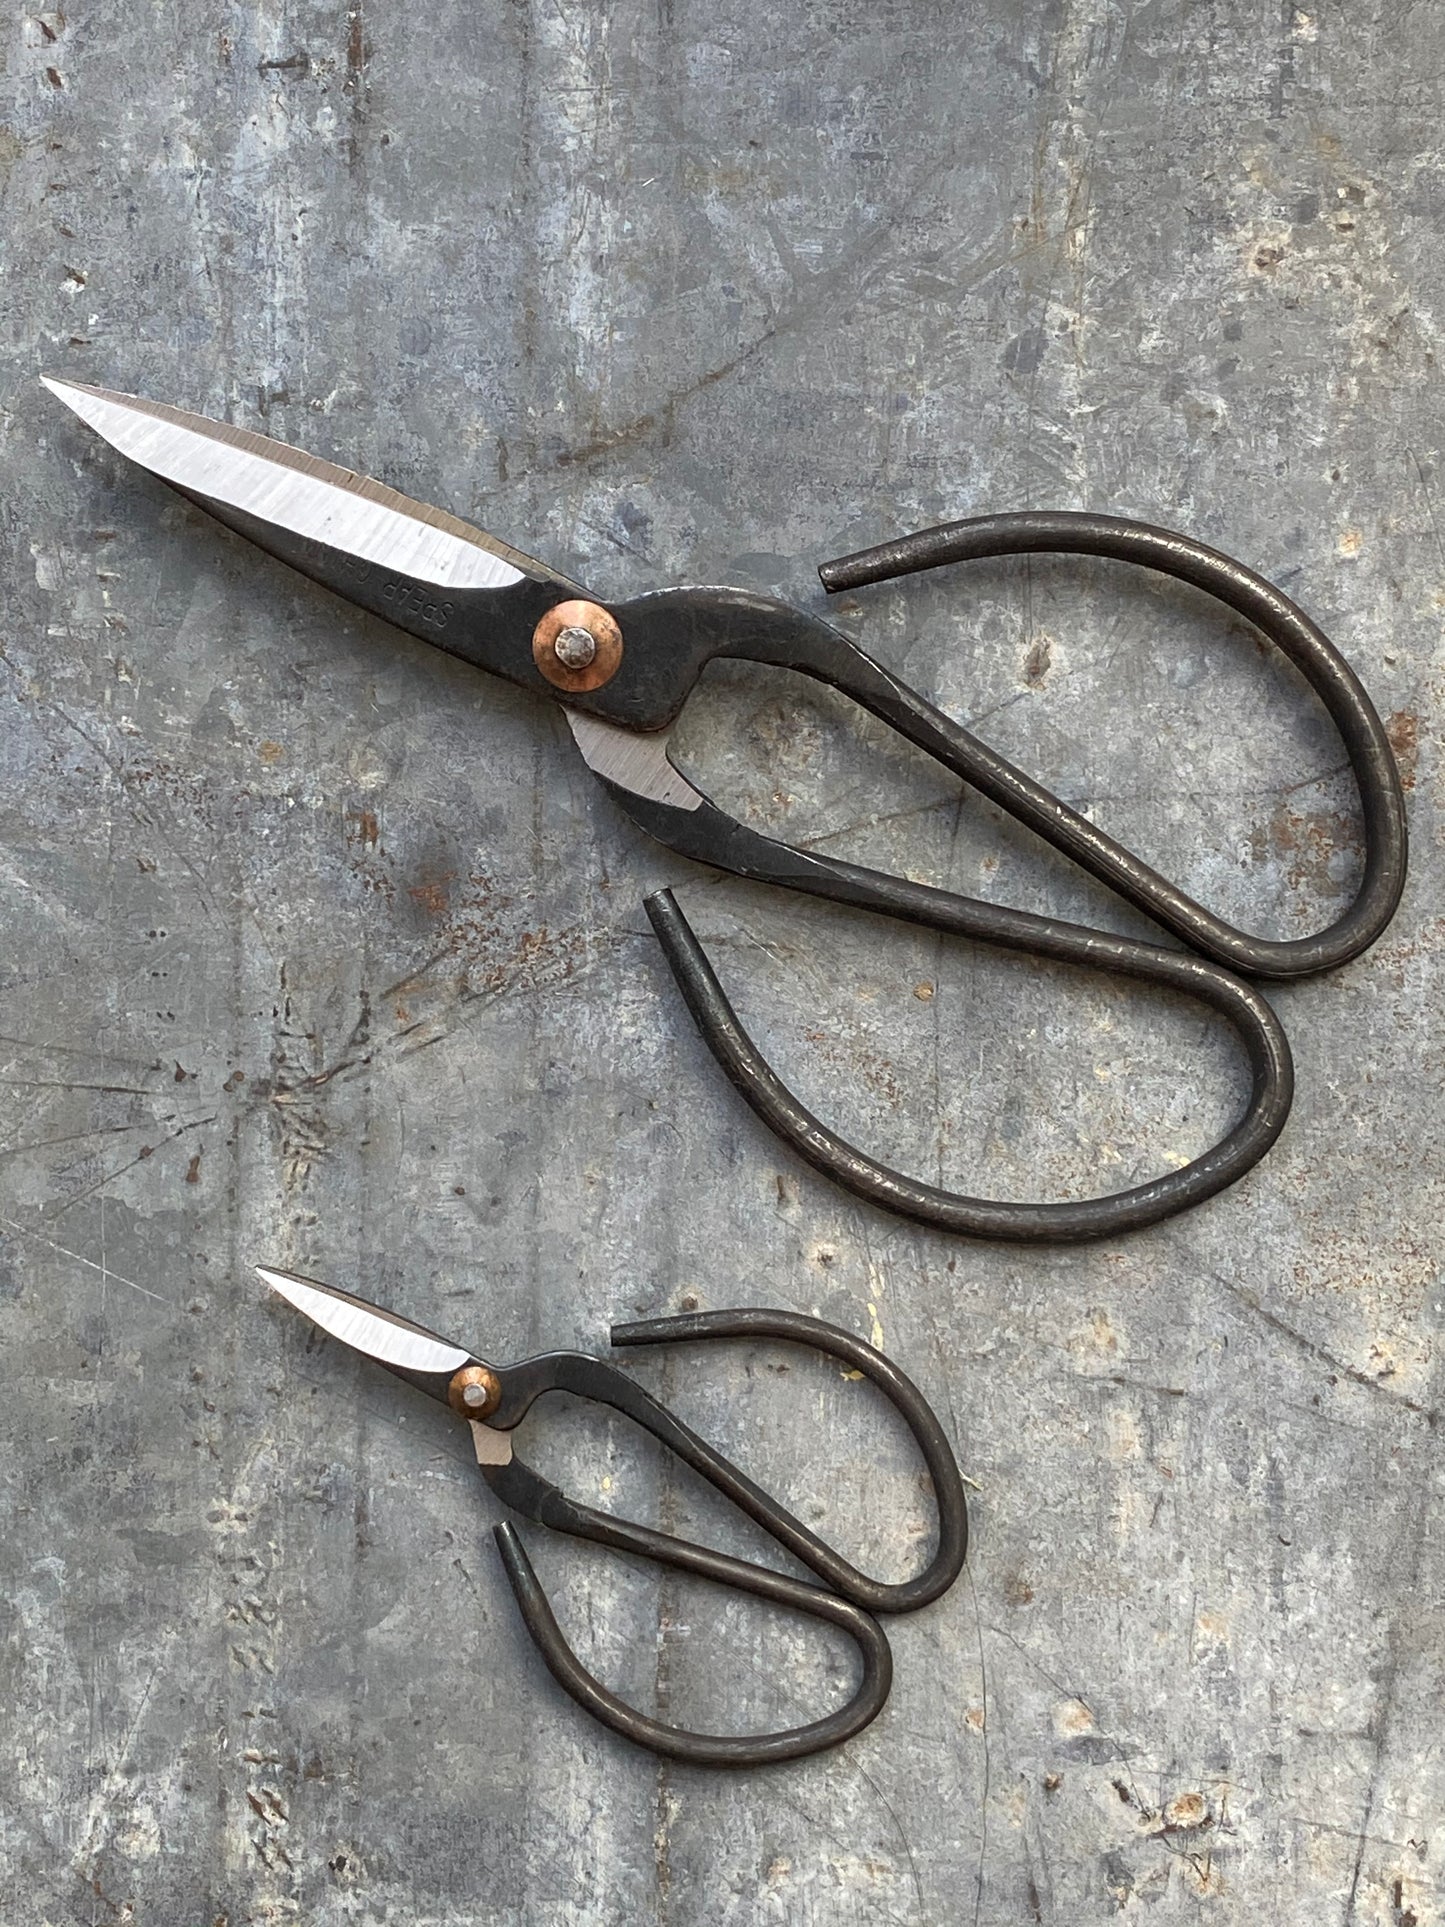 Vintage Style scissors for Florist, Gardener or Craft work